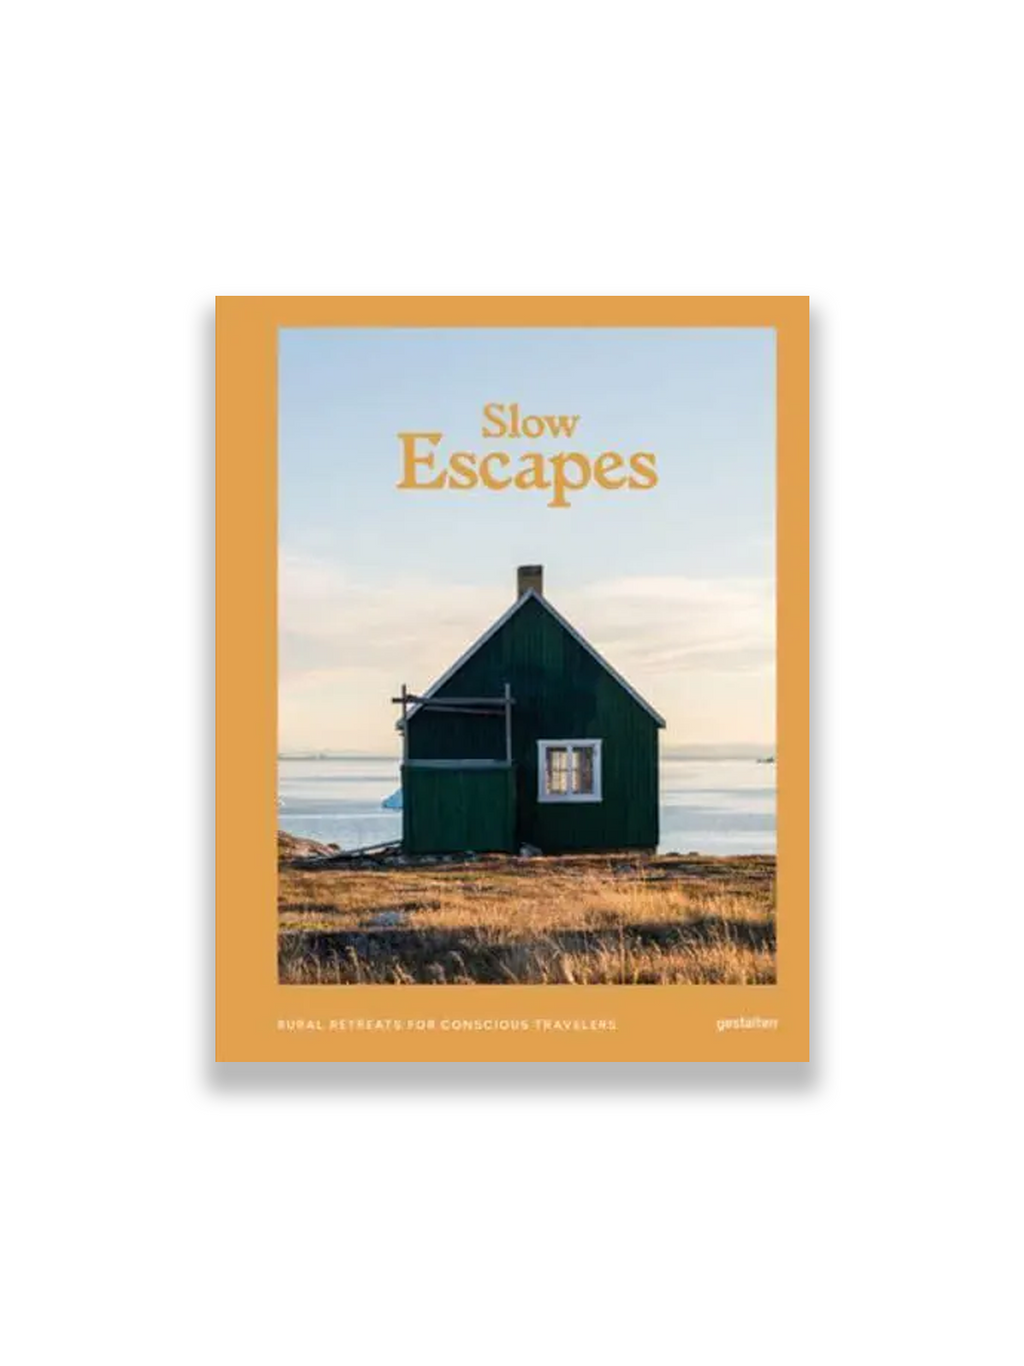 Slow Escapes: Rural Retreats for Conscious Travelers